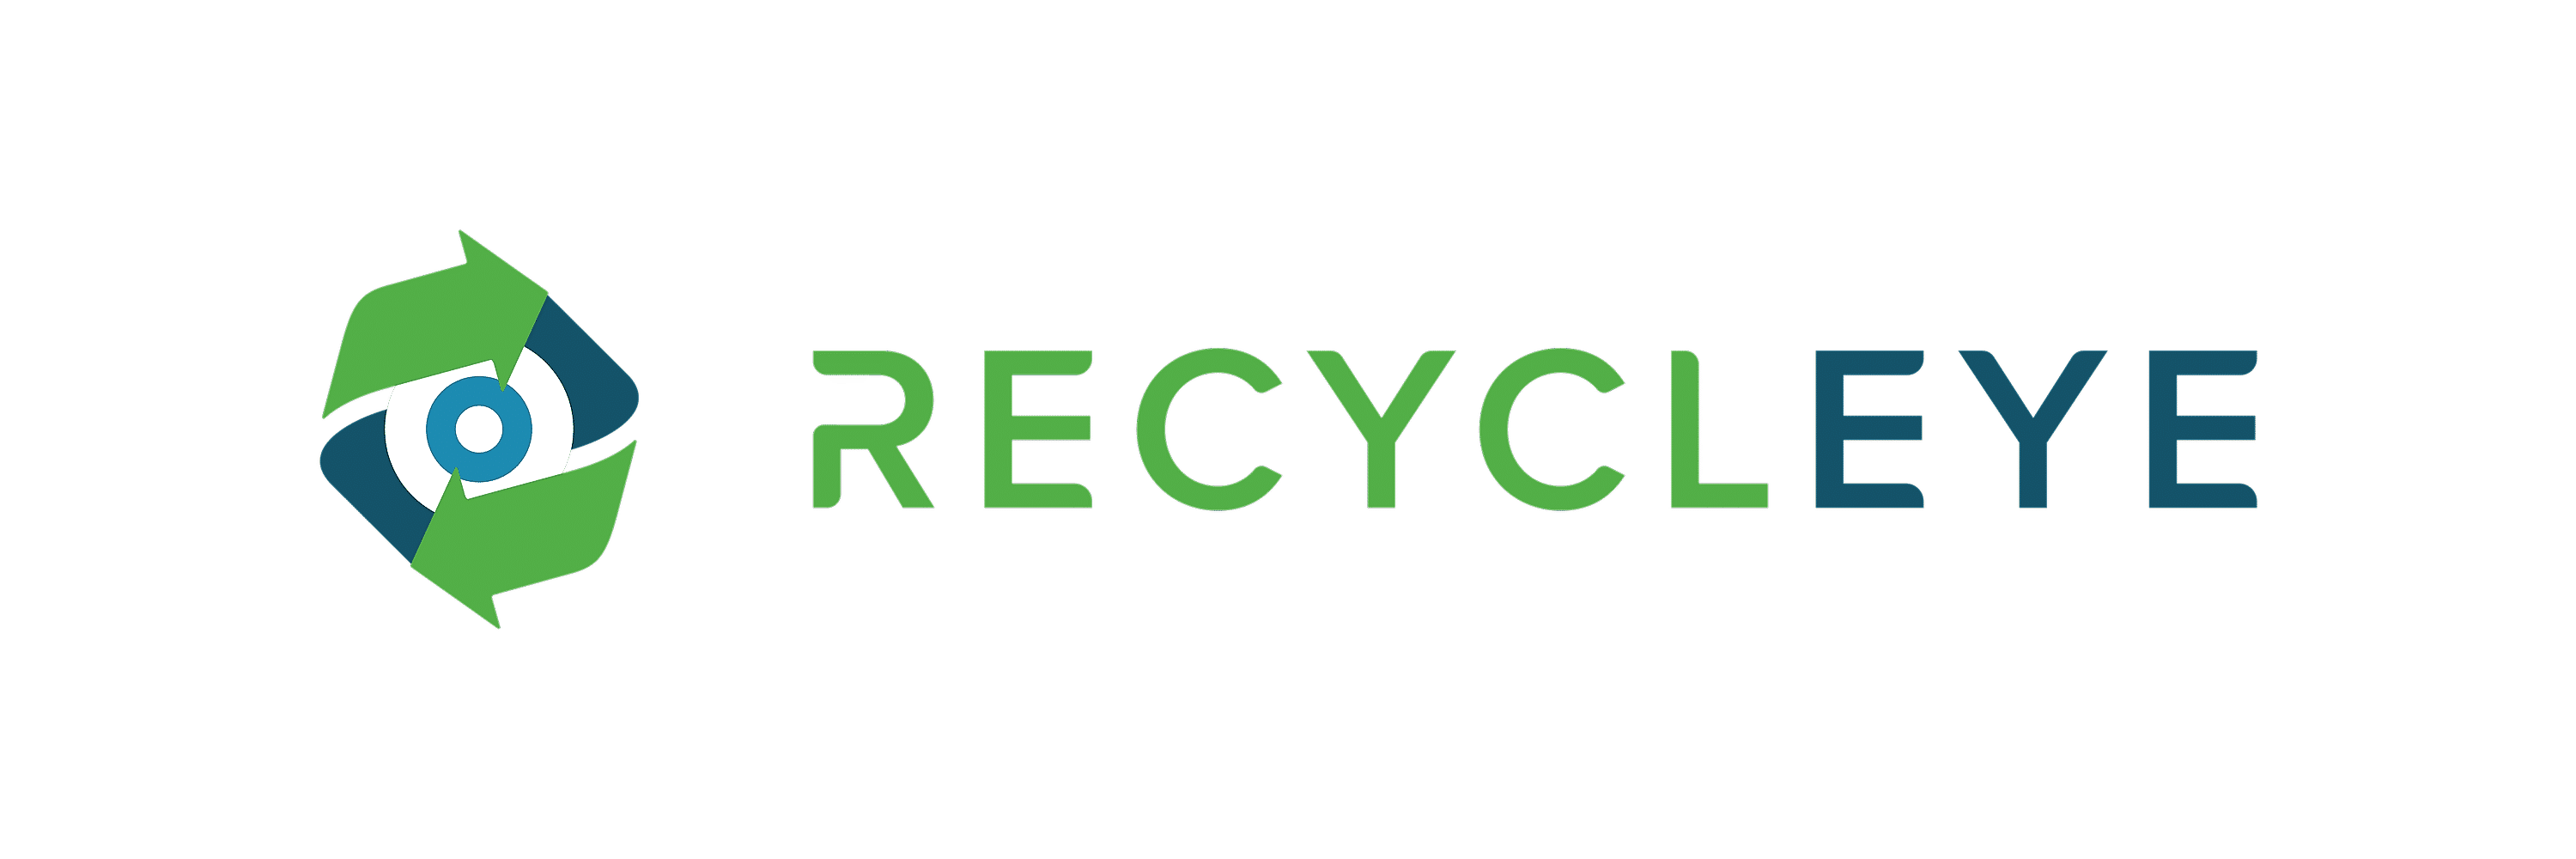 Recycleye